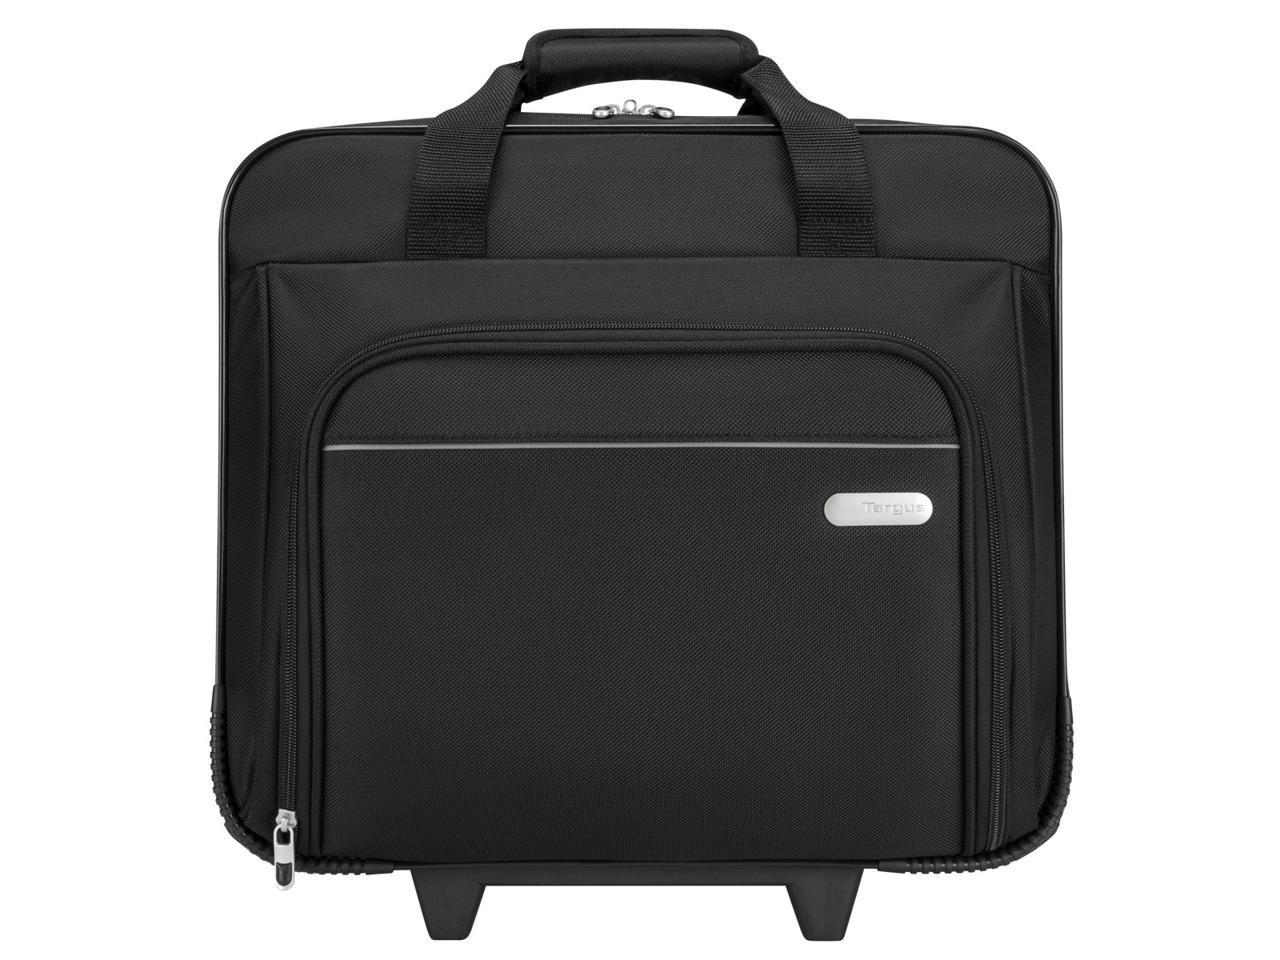 Targus 16 Inch Rolling Laptop Case (Black) -TBR003US